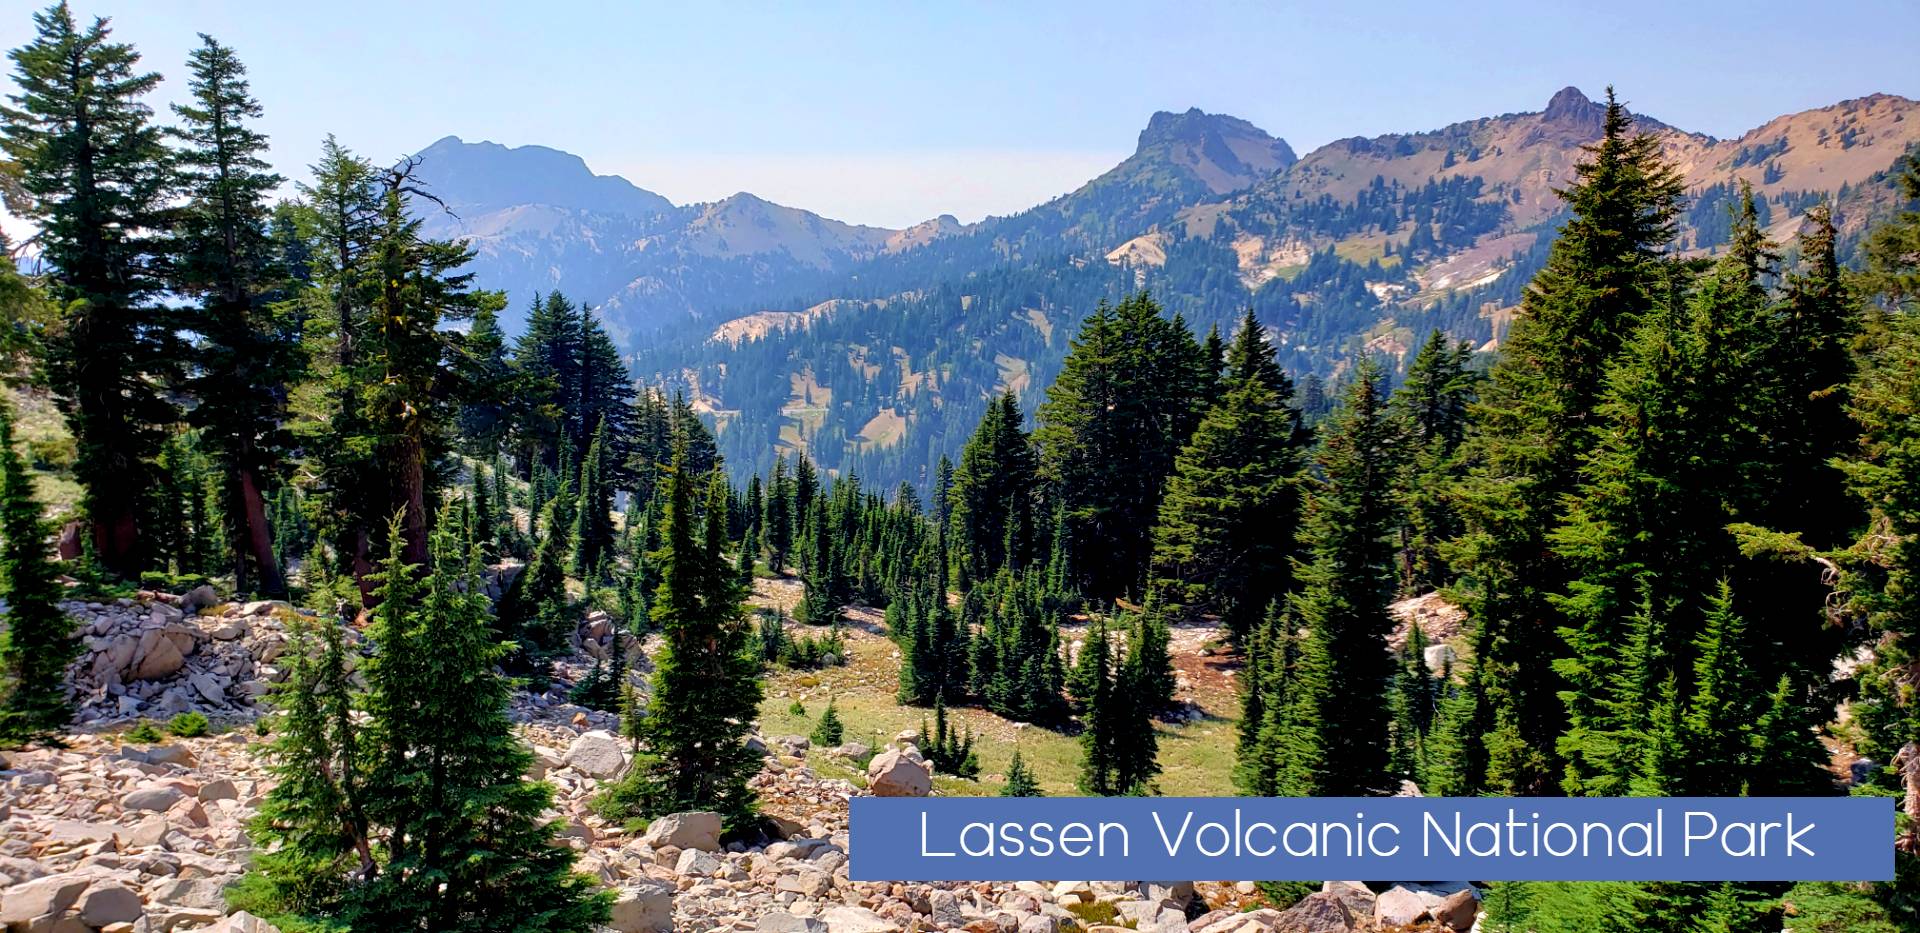 Lassen volcanic National Park brokeoff mtn